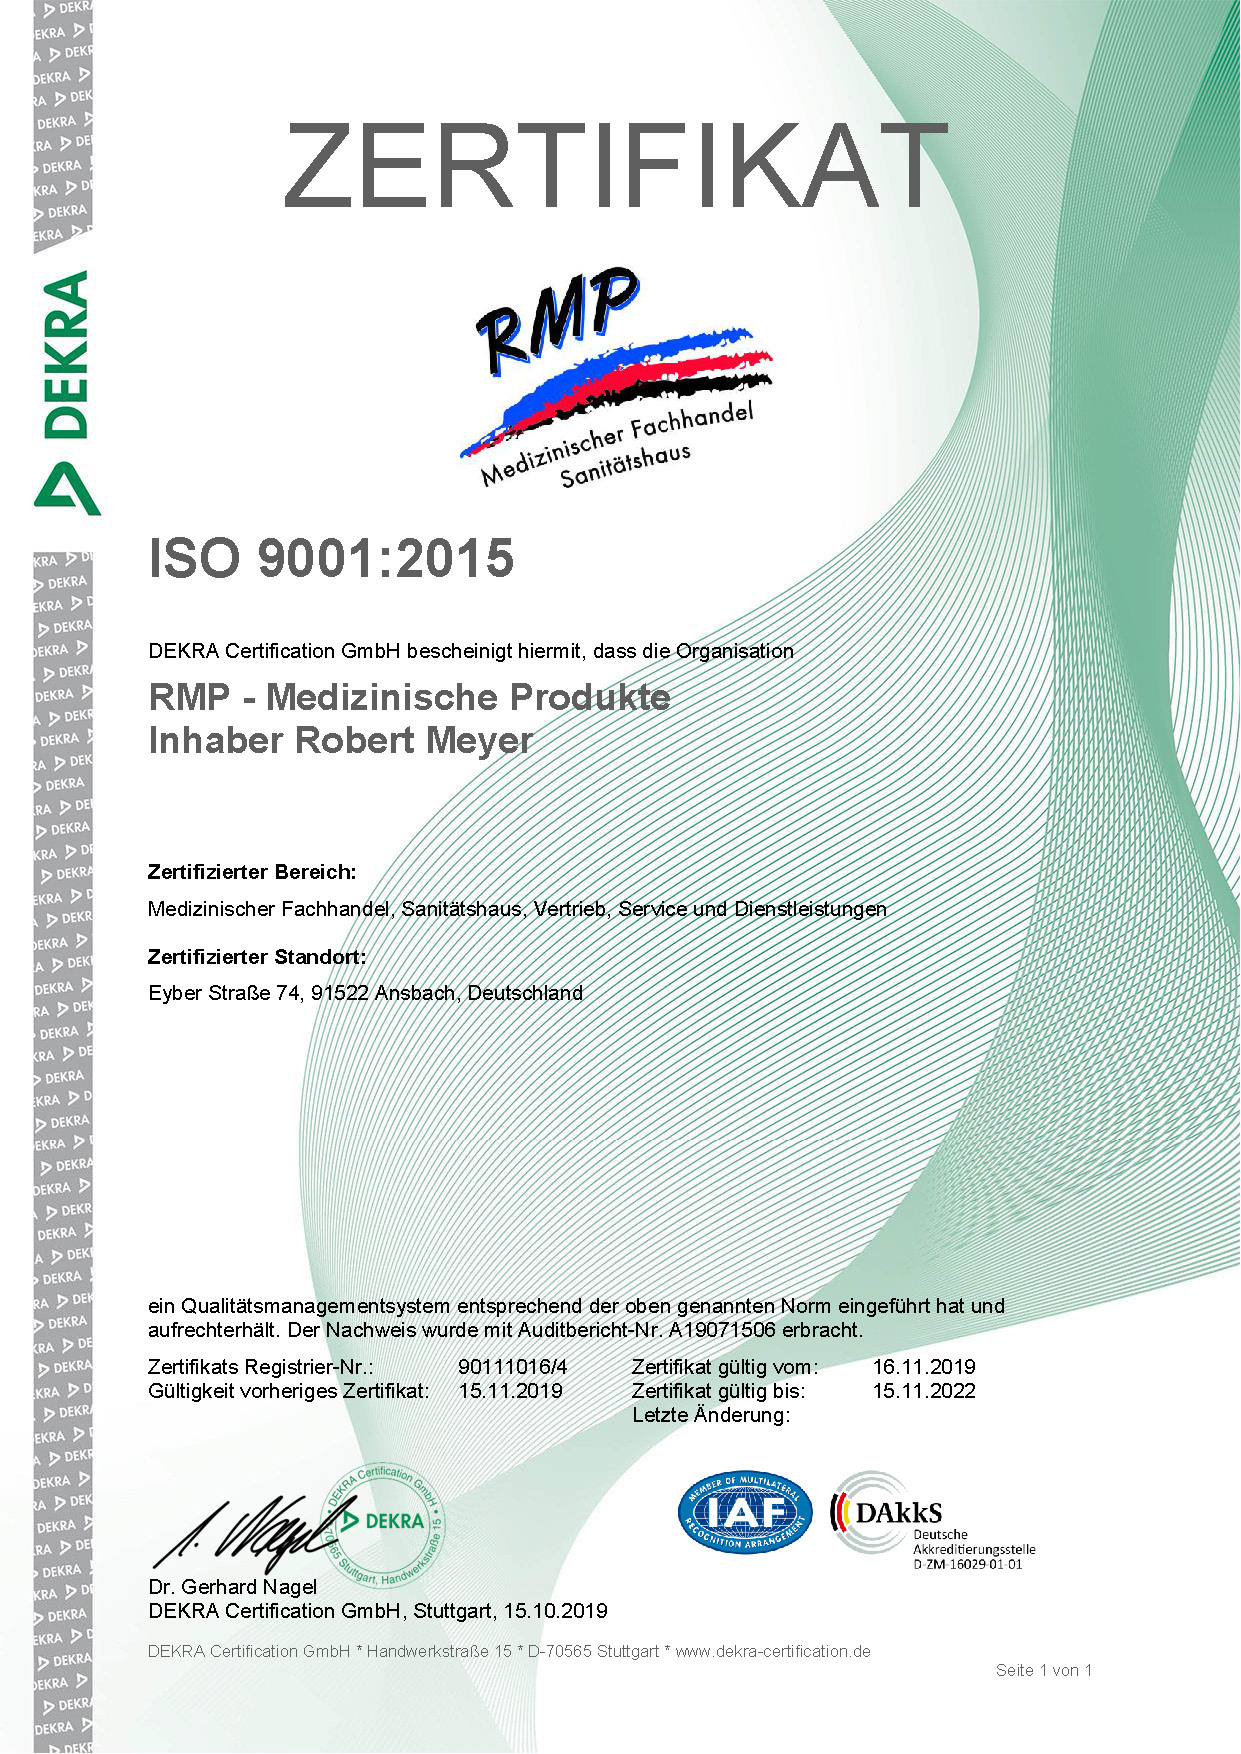 Zertifikat-9001-2015-bis-15.11.2022